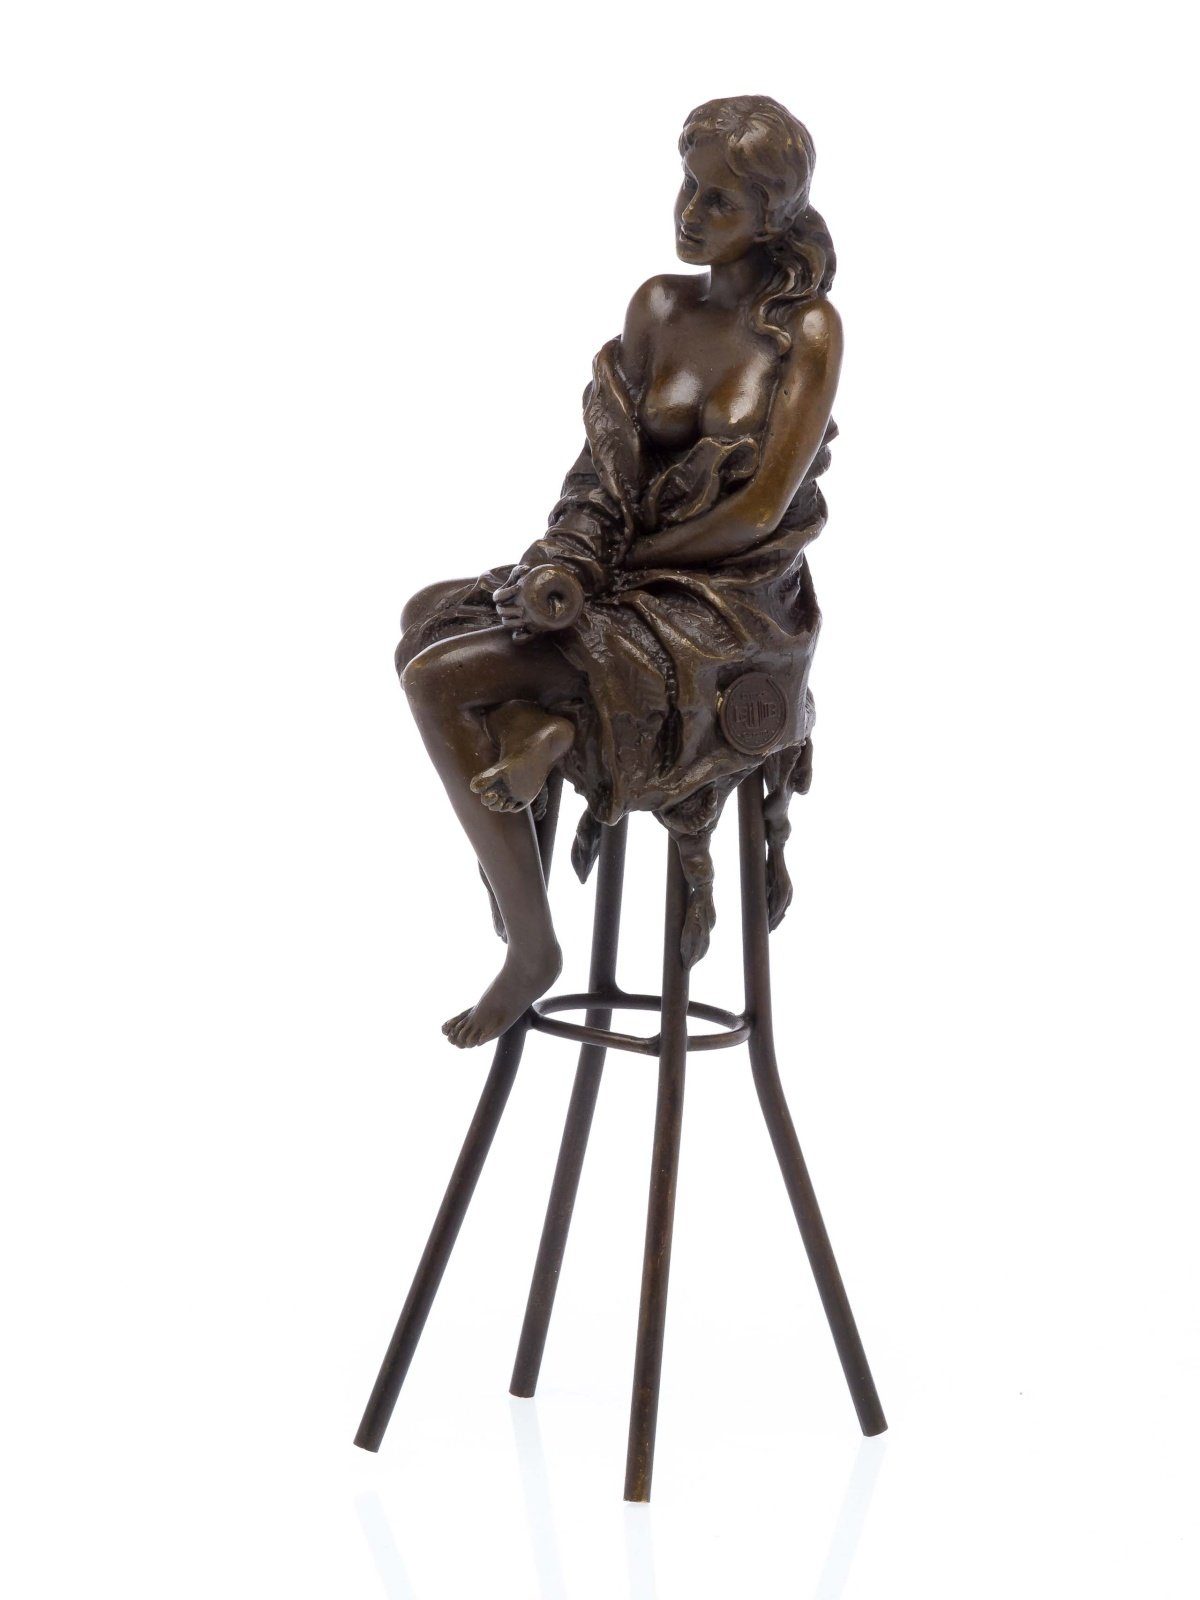 Aubaho Skulptur Figur Frau erotische Bronze Skulptur Kunst an Sculpture Bronzeskulptur